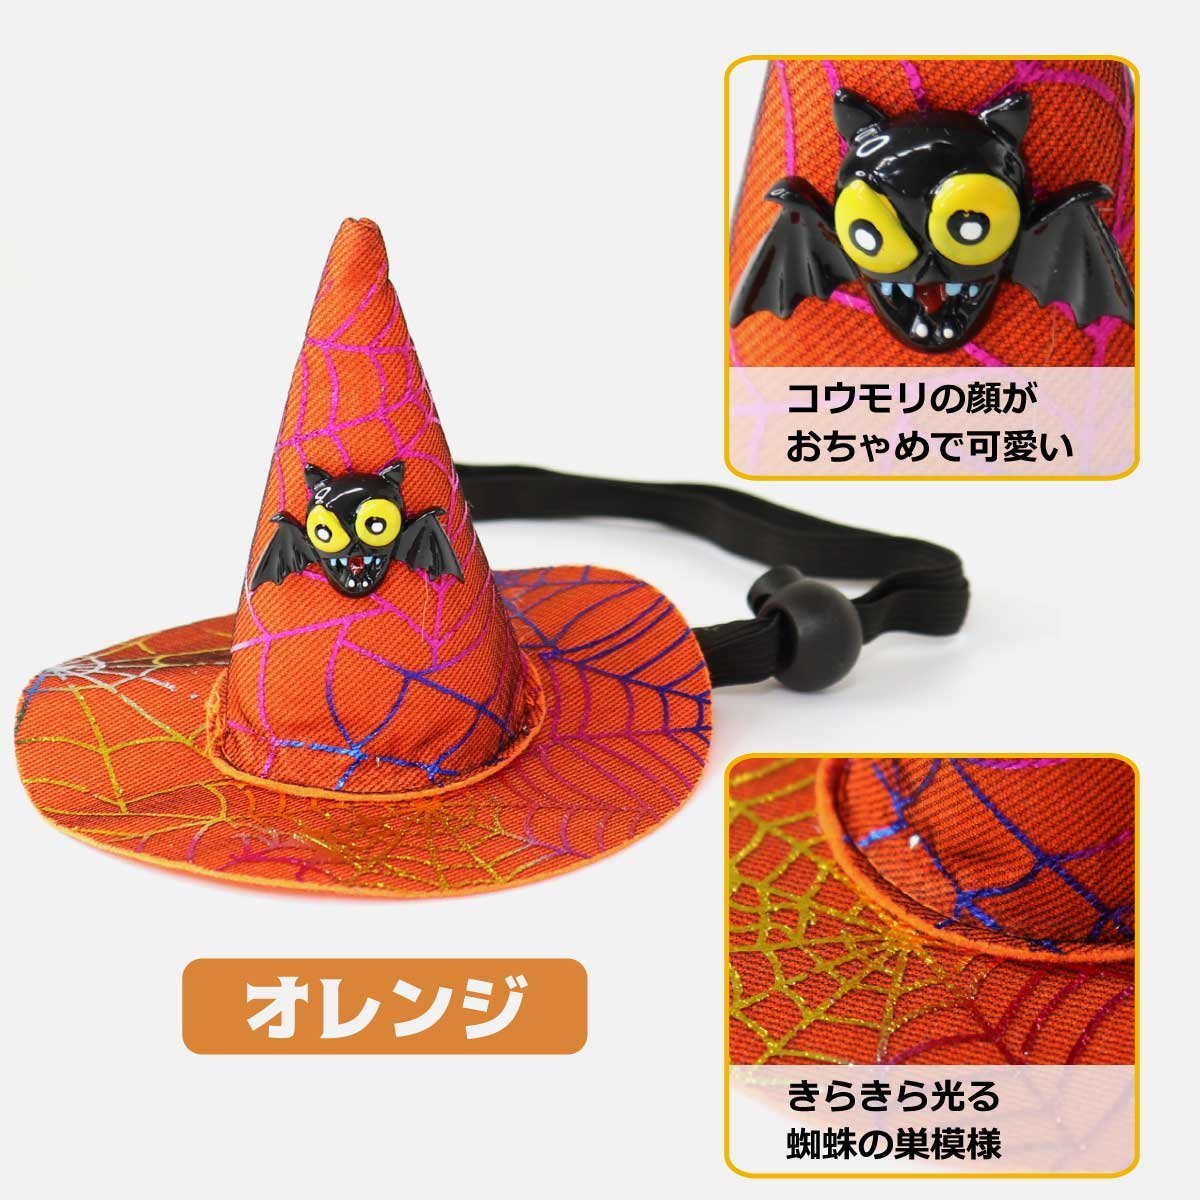 H10751-B1[ goods with special circumstances ][ new goods ] Halloween pet hat ..... woman orange bat costume fancy dress dog cat costume Event party 